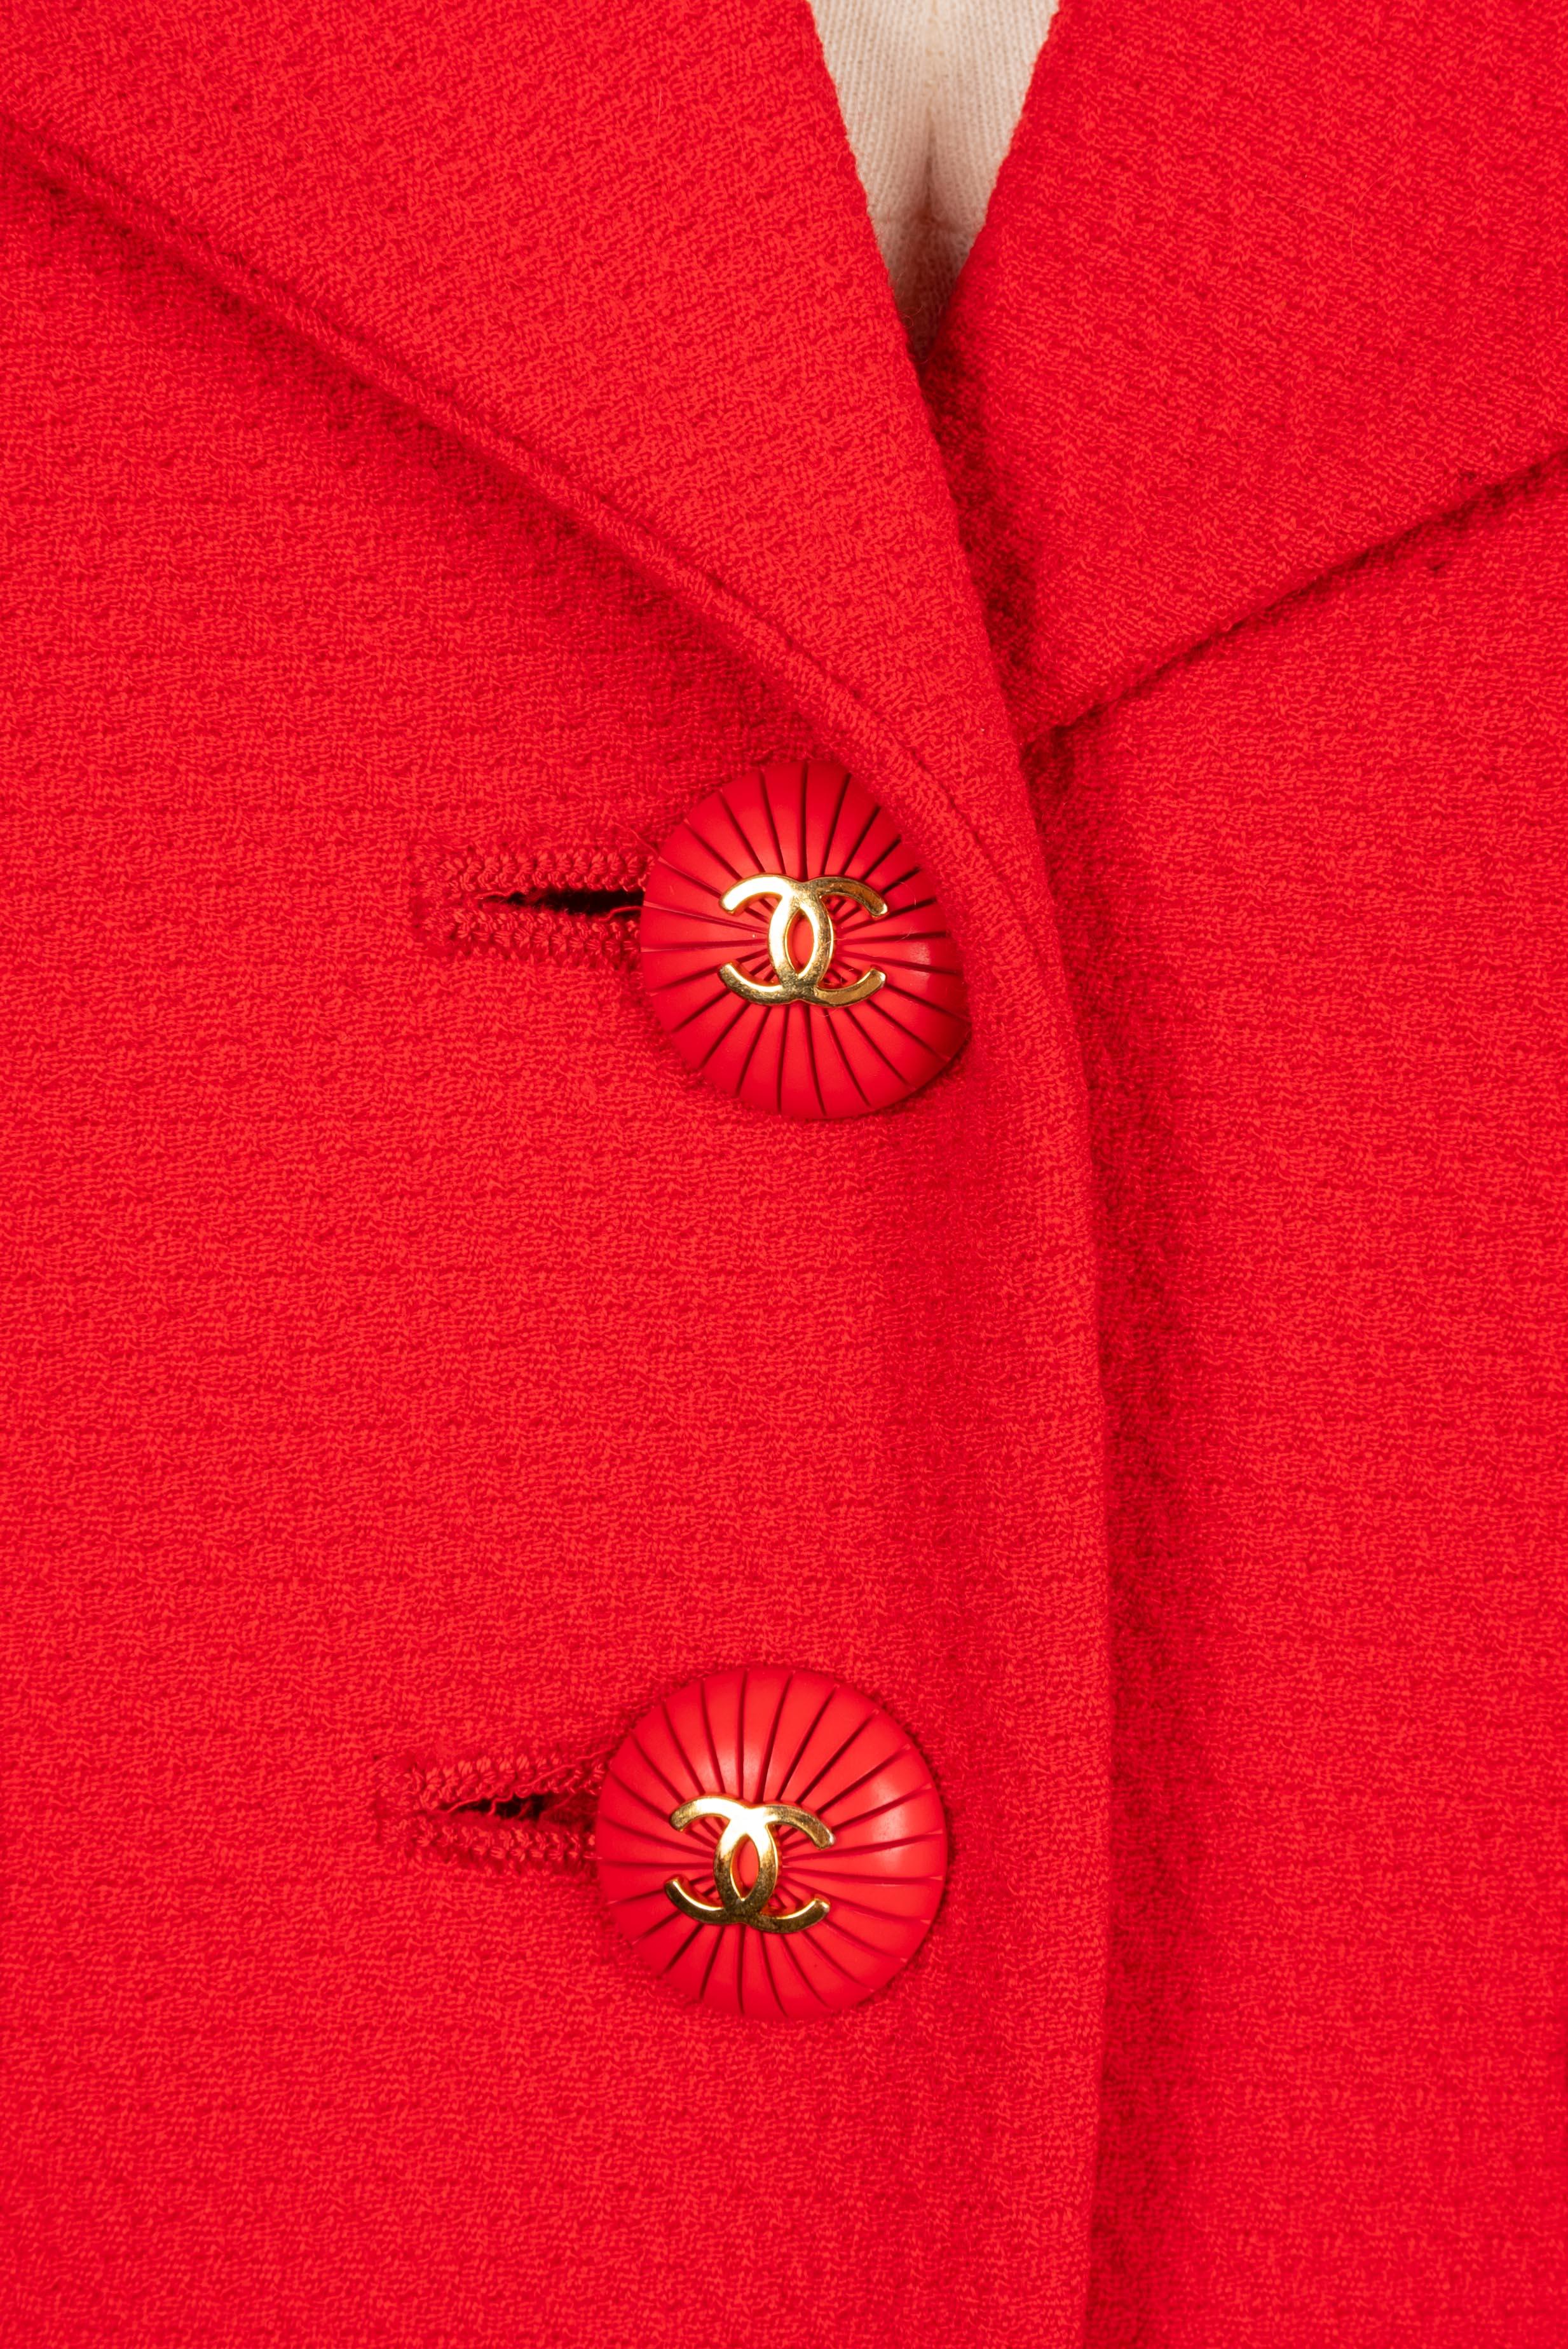 Women's or Men's Chanel red jacket Spring-Summer 1993